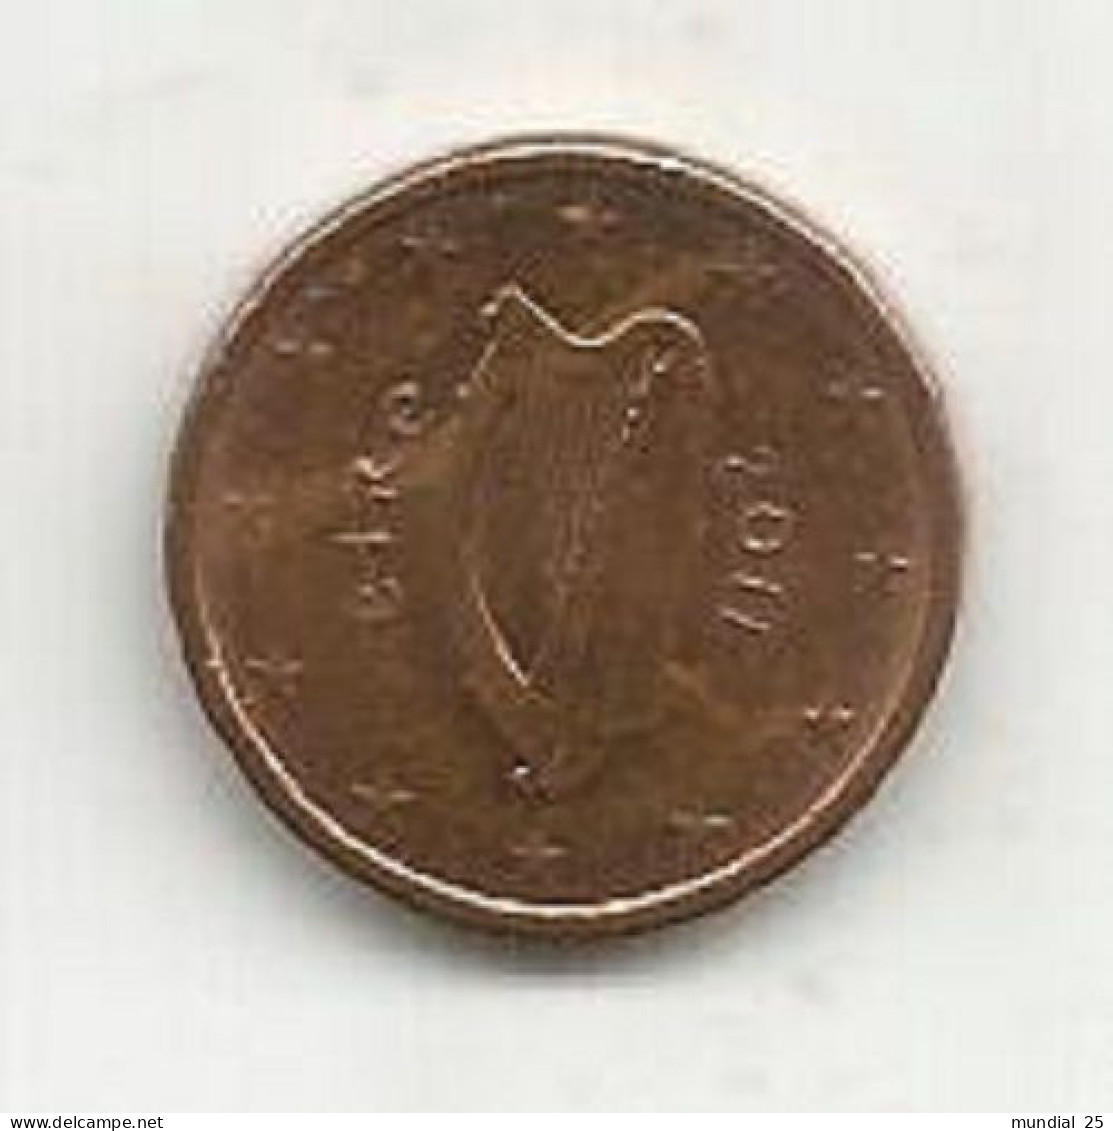 IRELAND 1 EURO CENT 2011 - Ireland